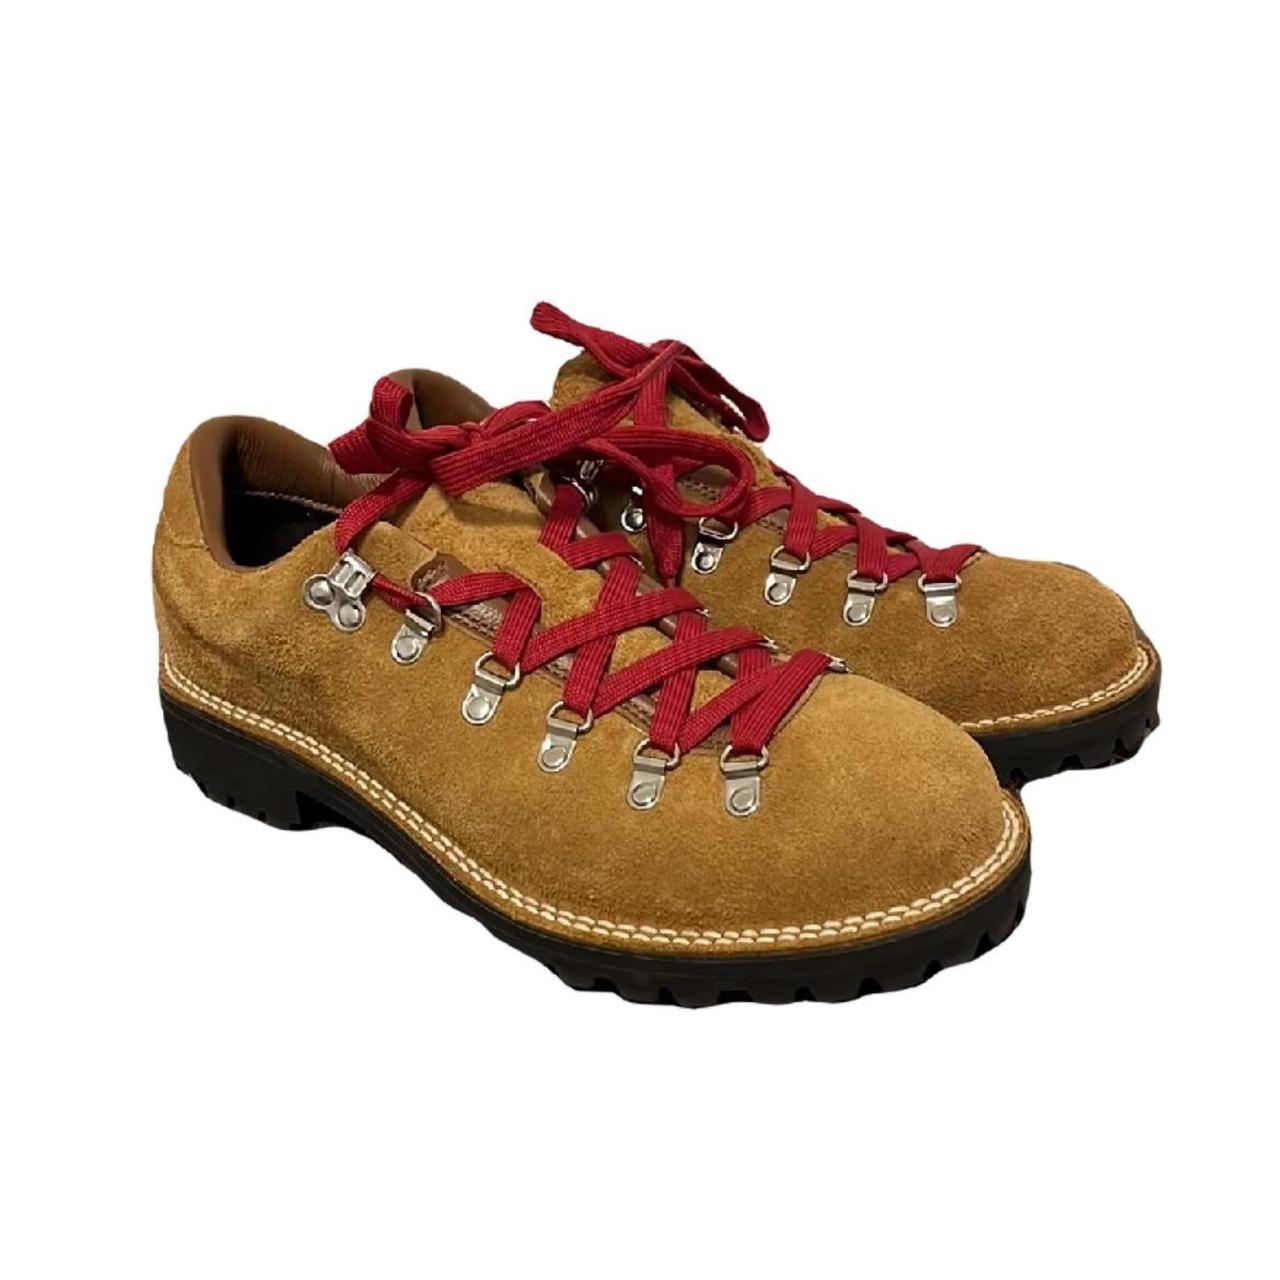 J. Crew Cascade Hiking Boots Size 10.5, no box 📦... - Depop